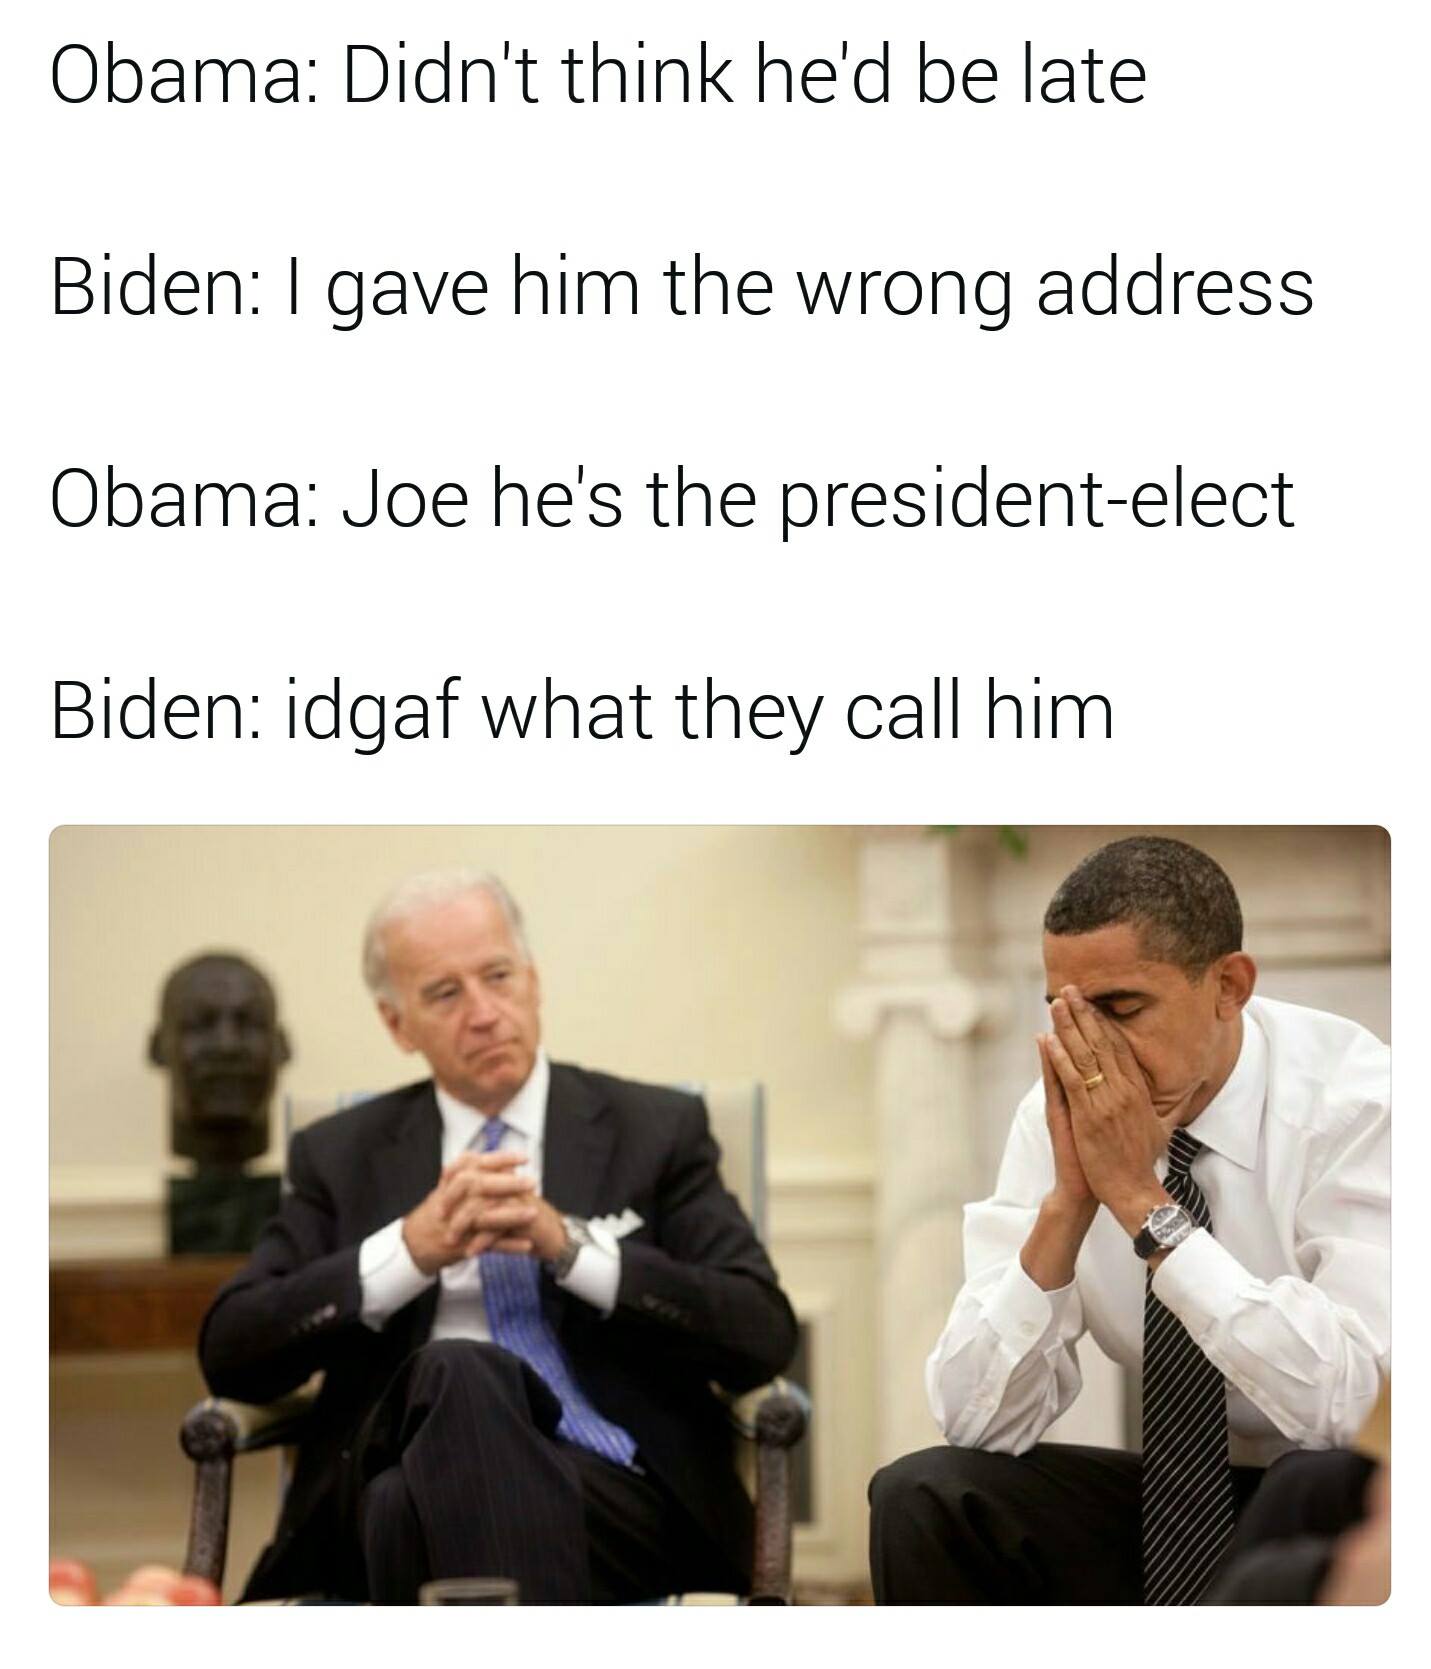 joe biden and barack obama - Obama Didn't think he'd be late Biden I gave him the wrong address Obama Joe he's the presidentelect Biden idgaf what they call him